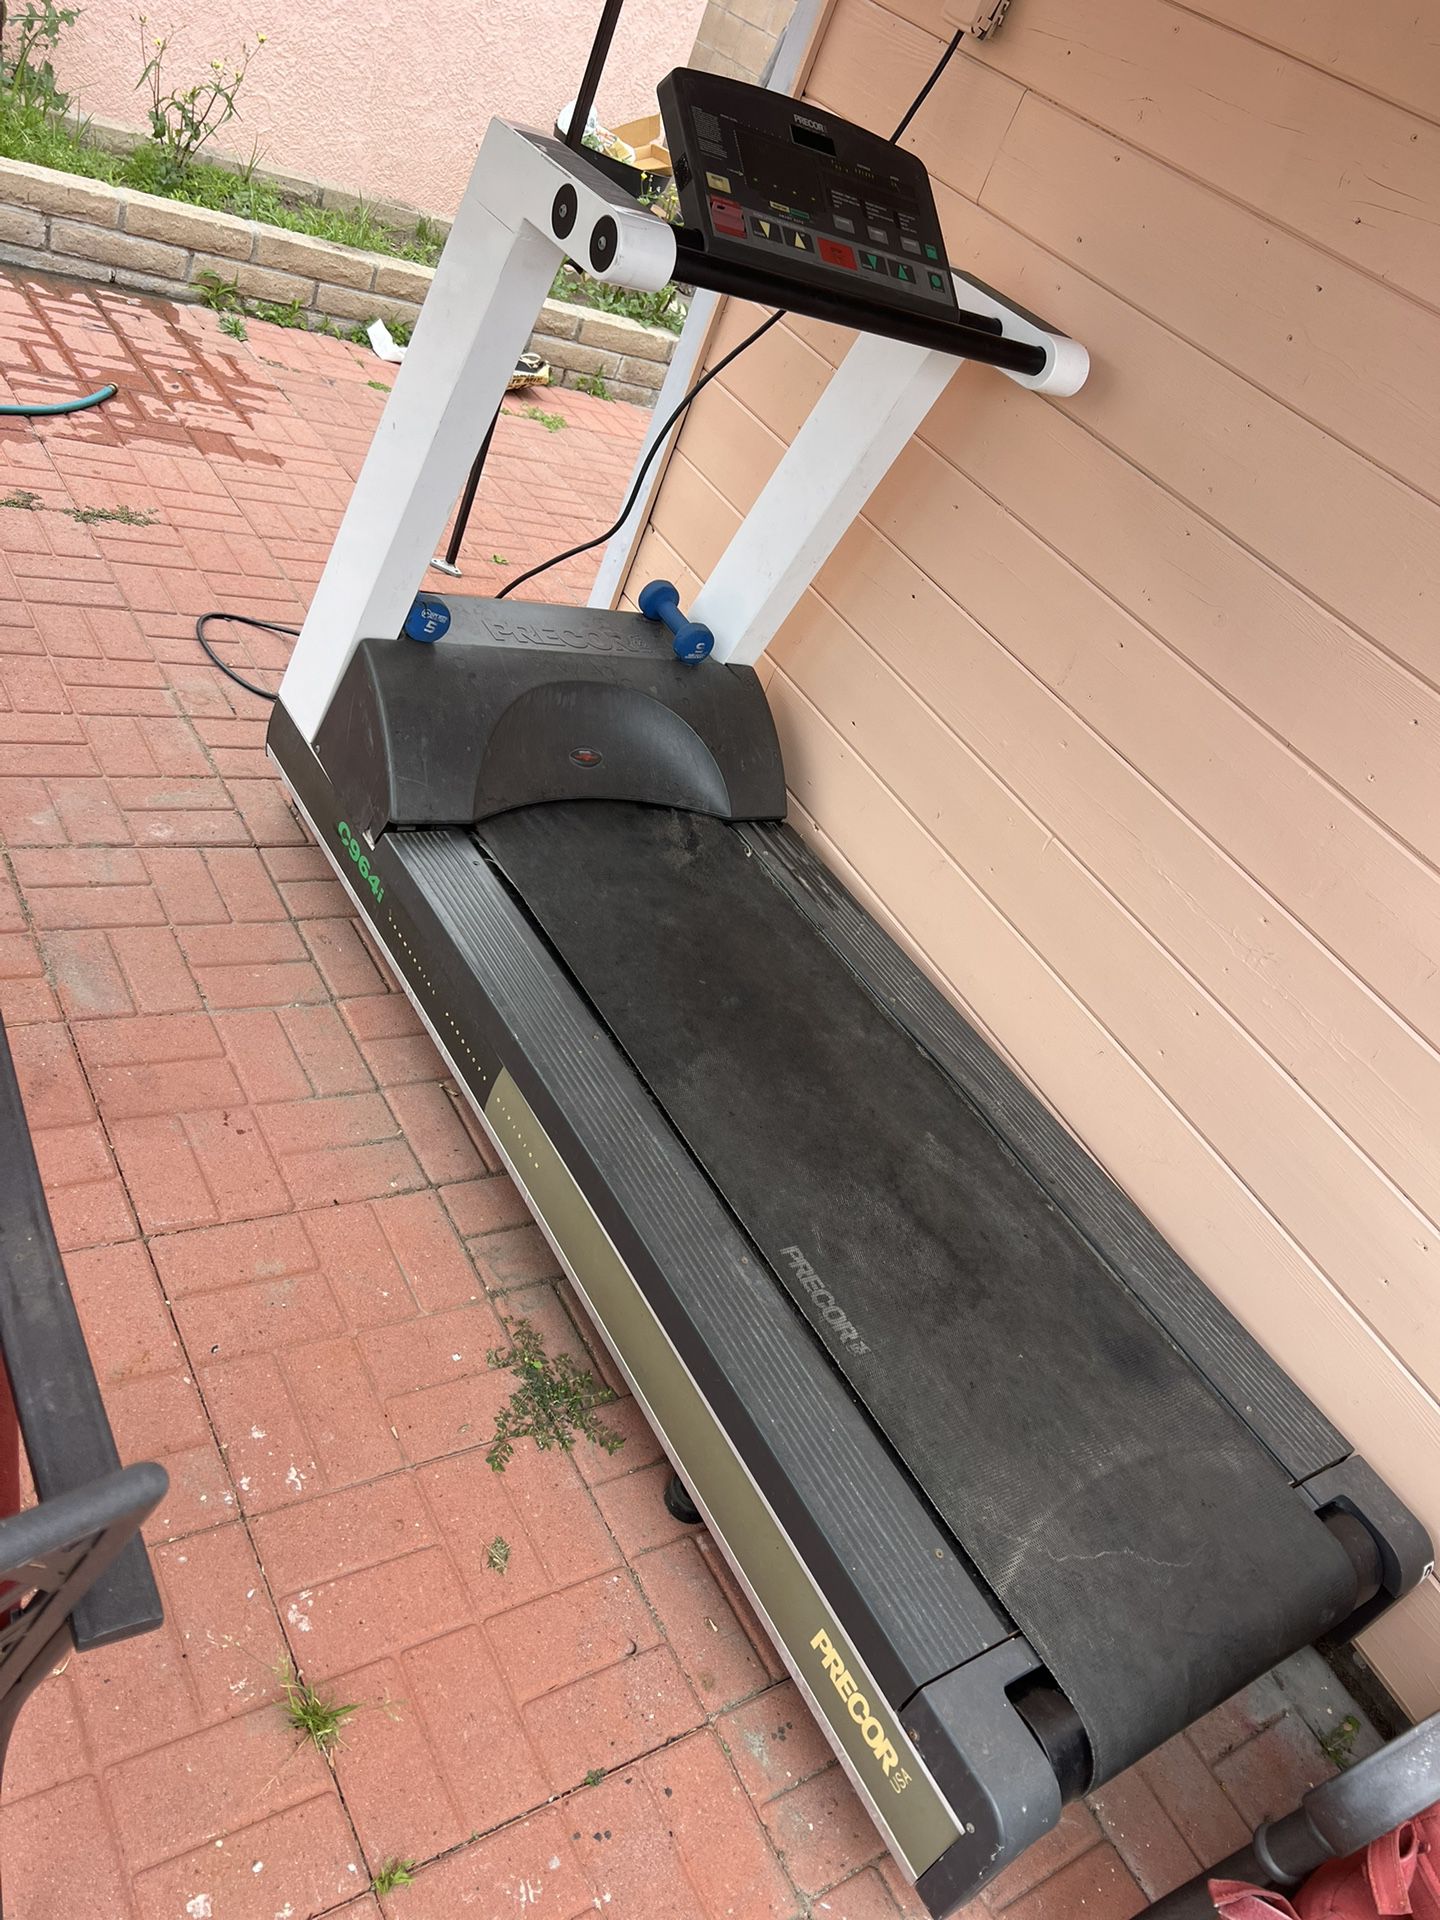 Treadmill Precor C964i